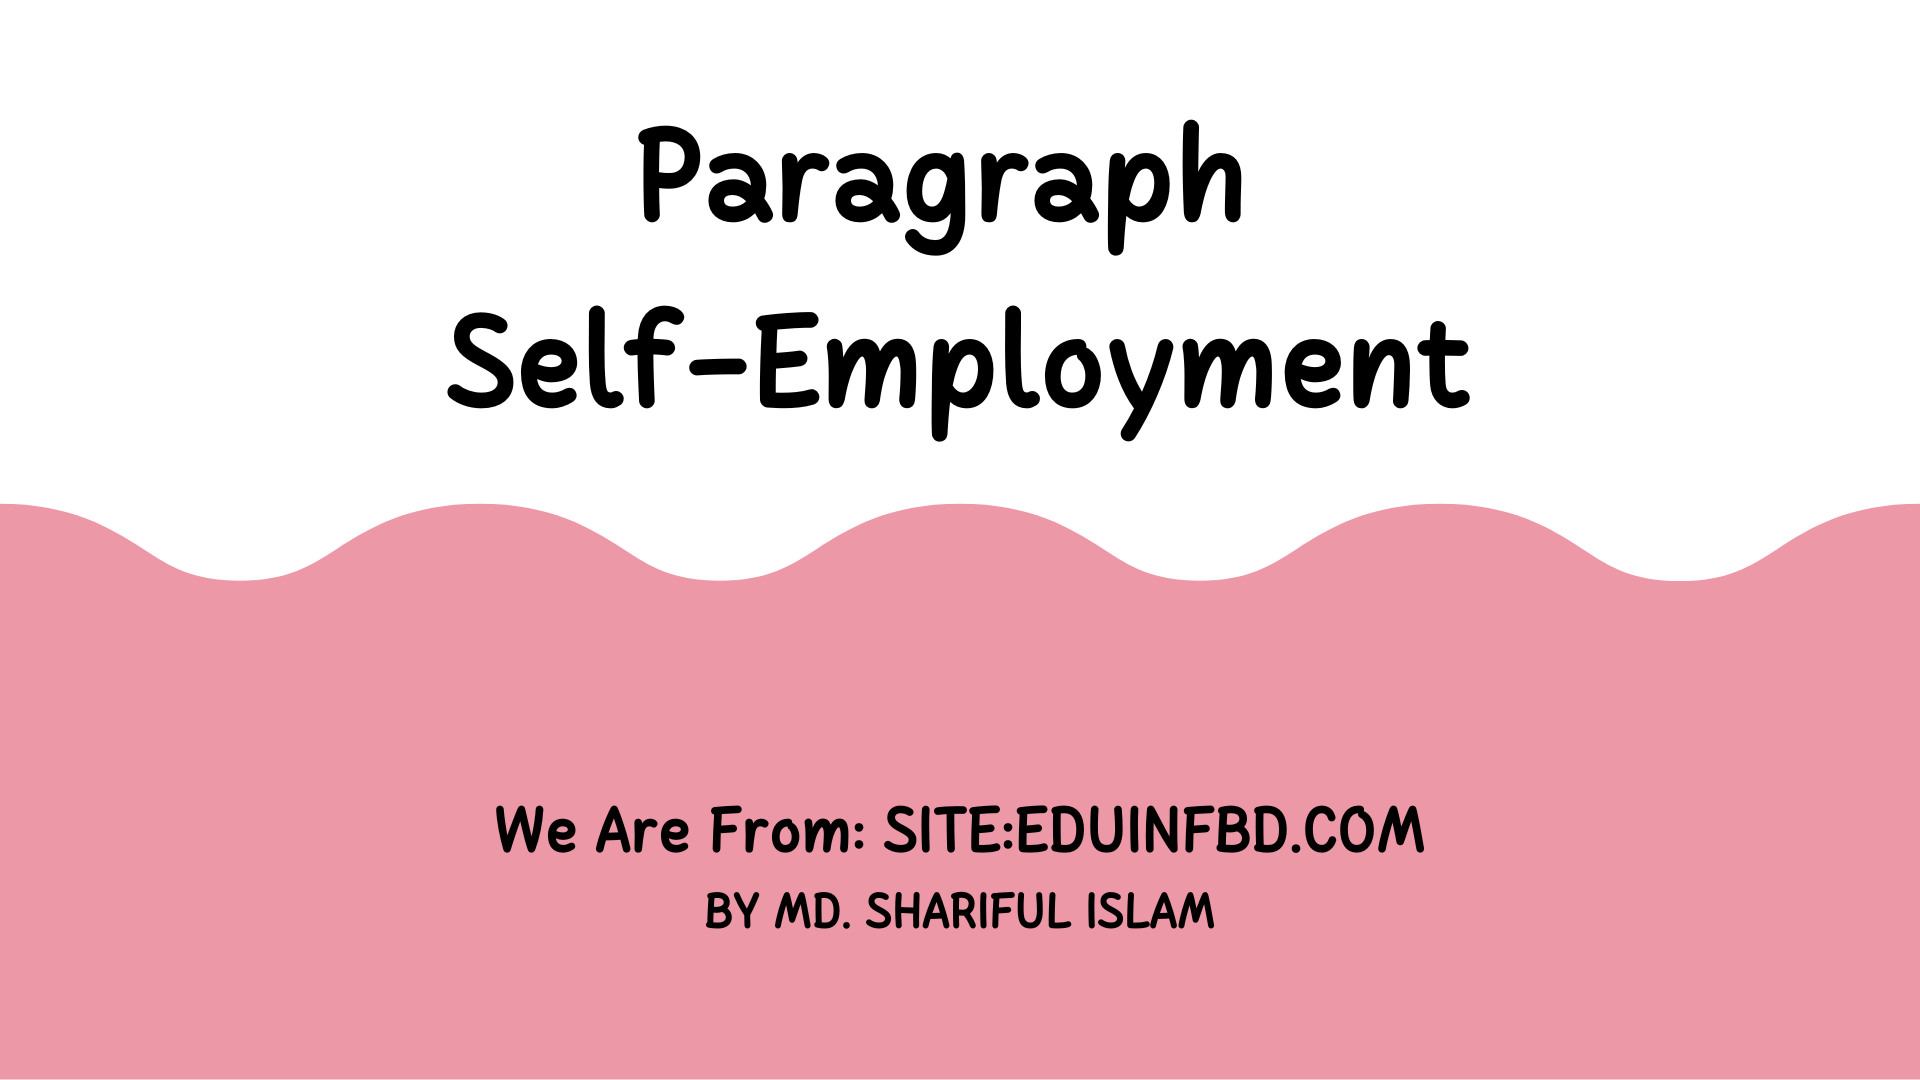 Paragraph Self-Employment